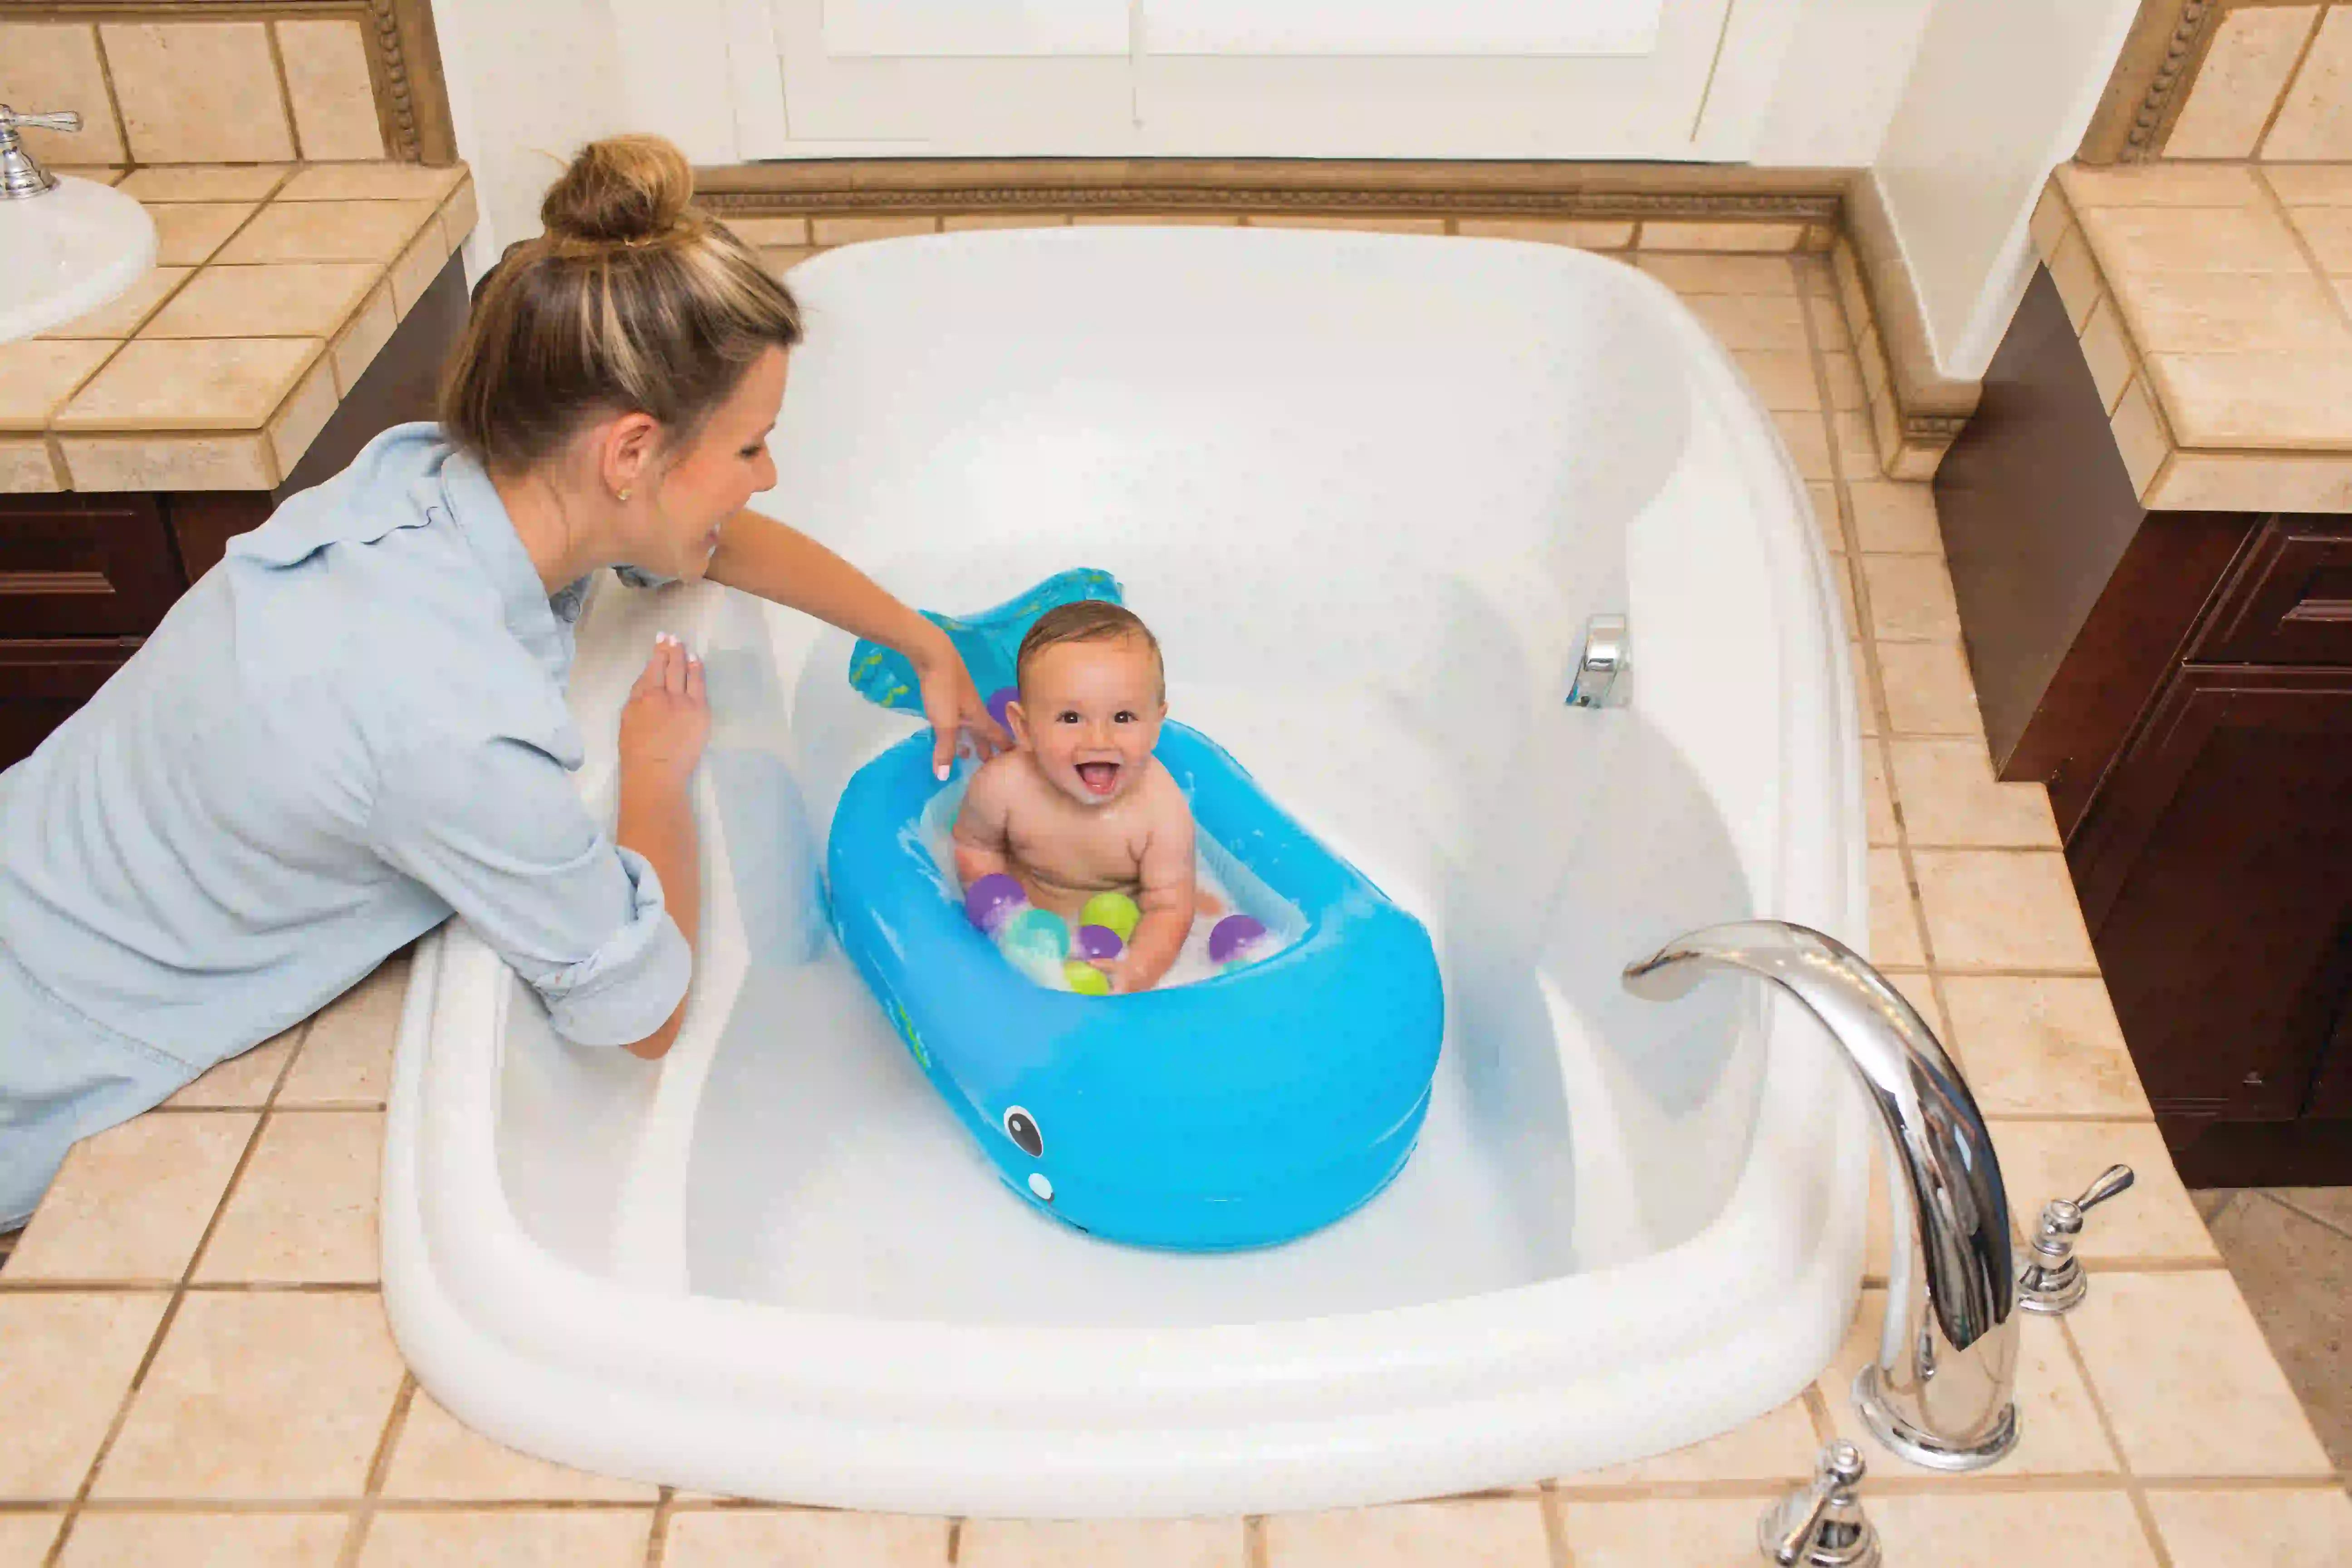 Infantino - Whale Bubble Ball Inflatable Bath Tub